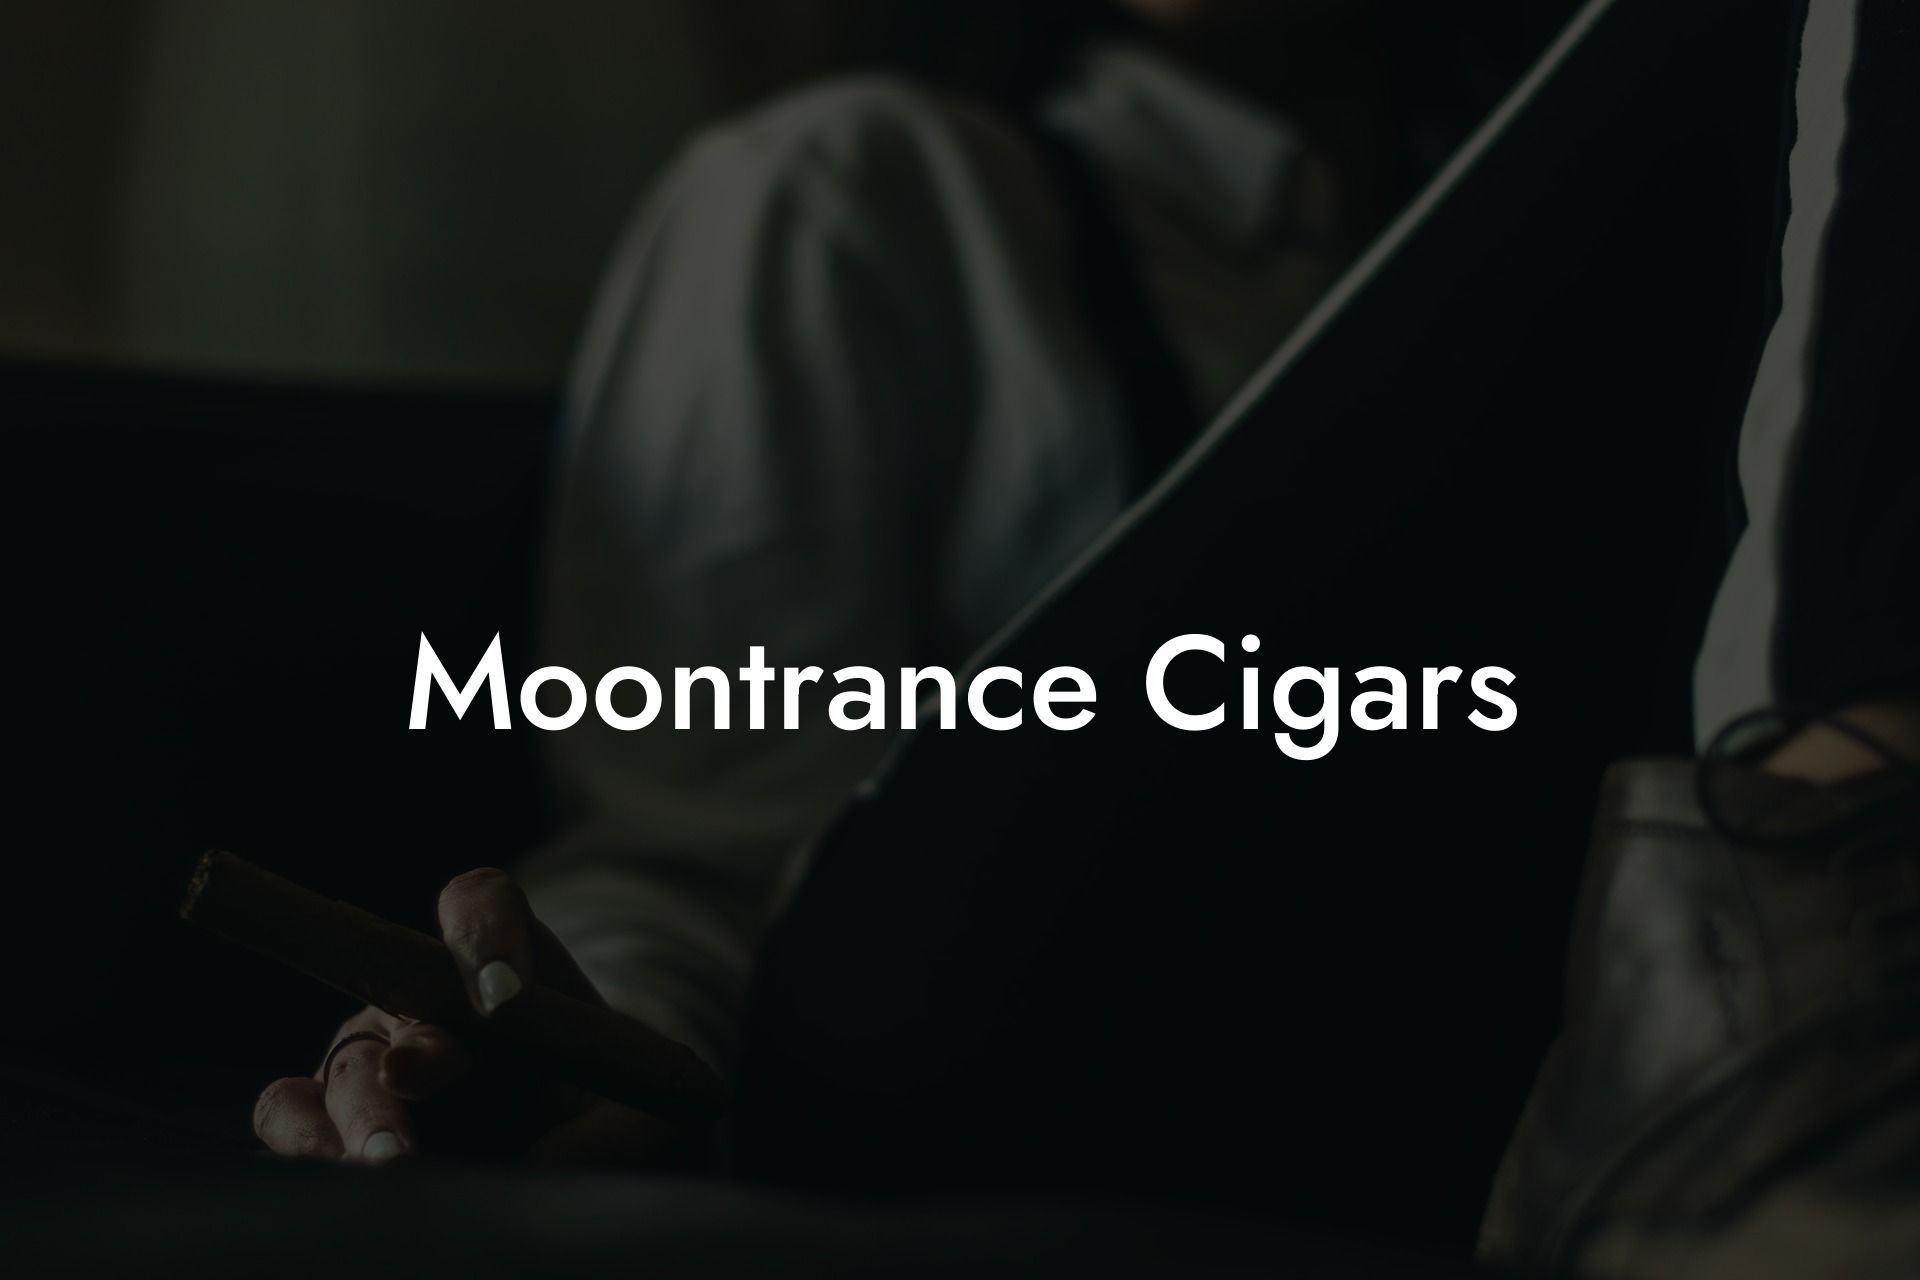 Moontrance Cigars